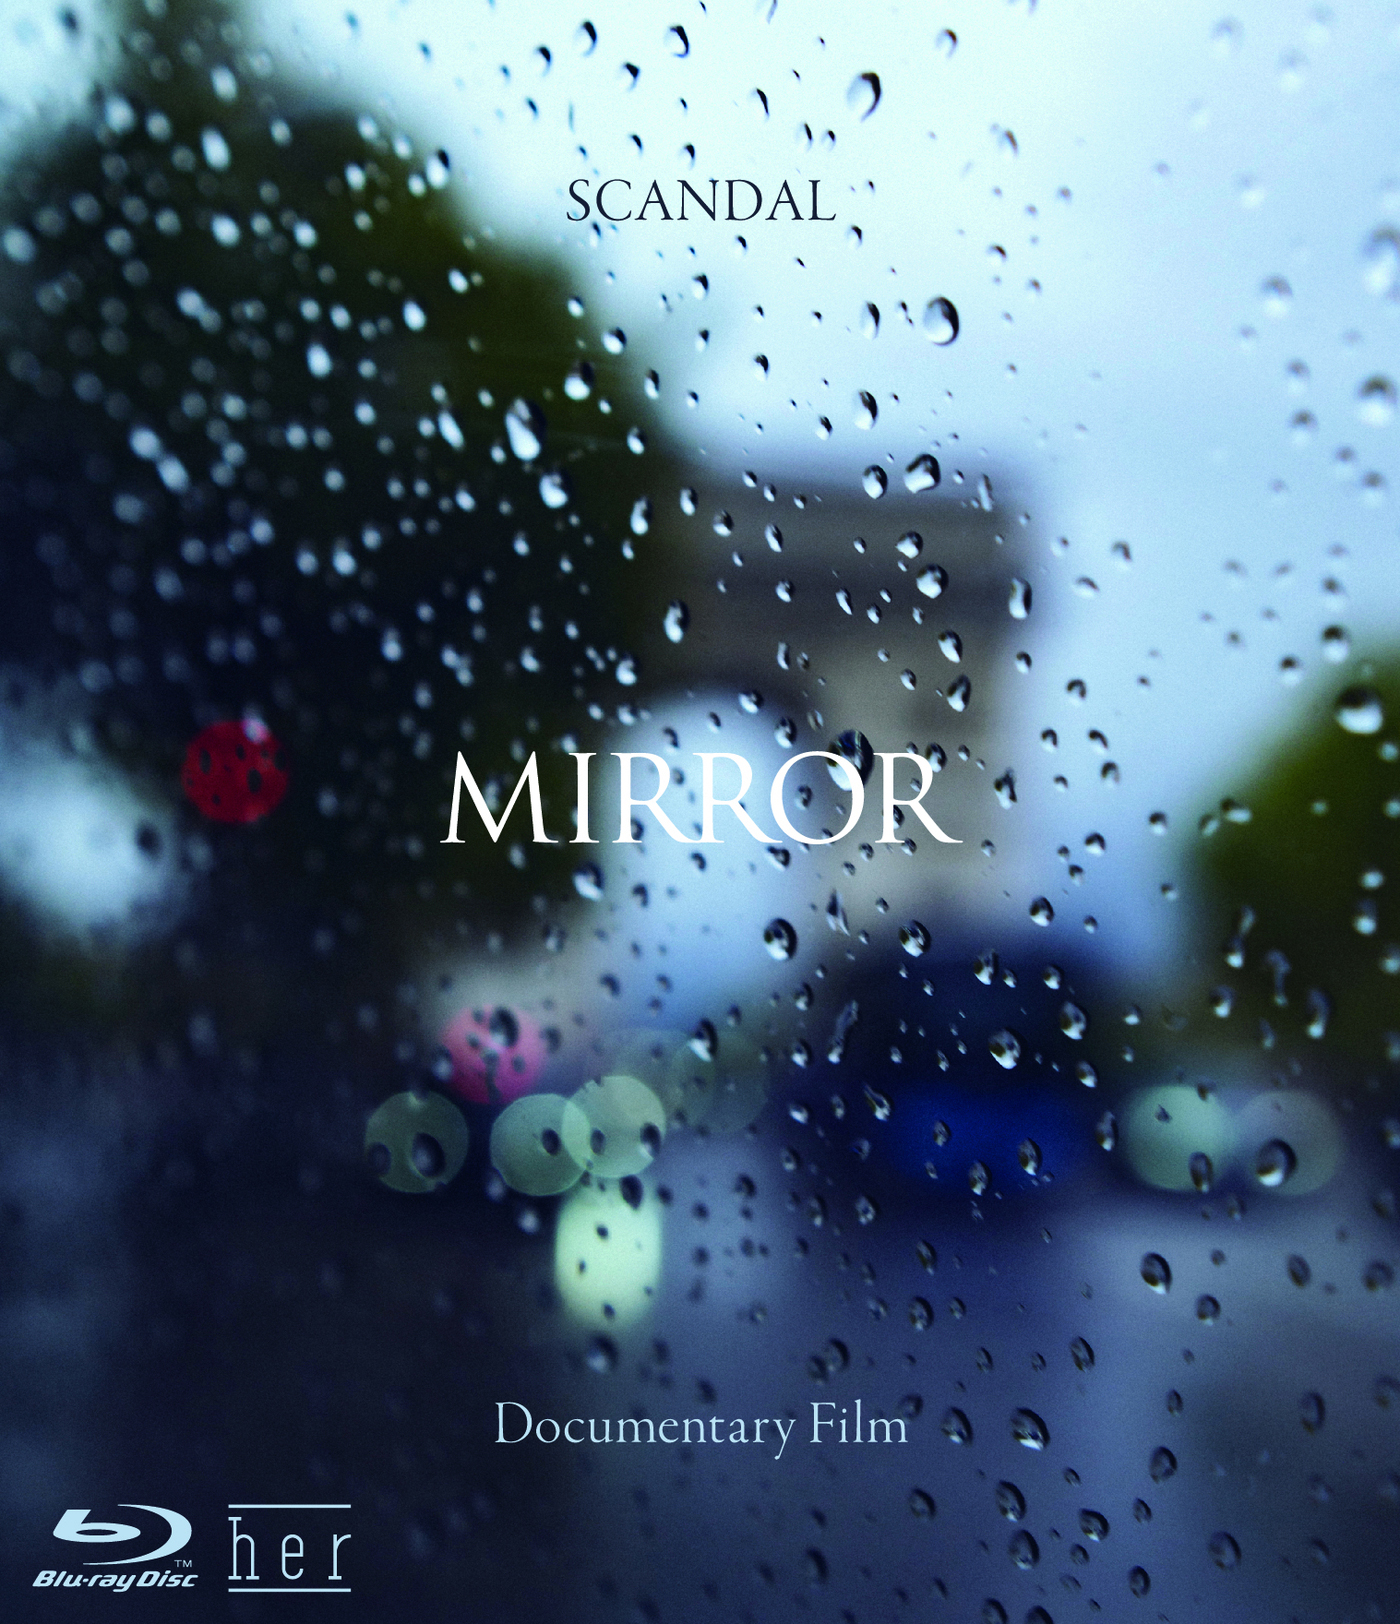 SCANDAL “Documentary film MIRROR” 20221224-st-203504